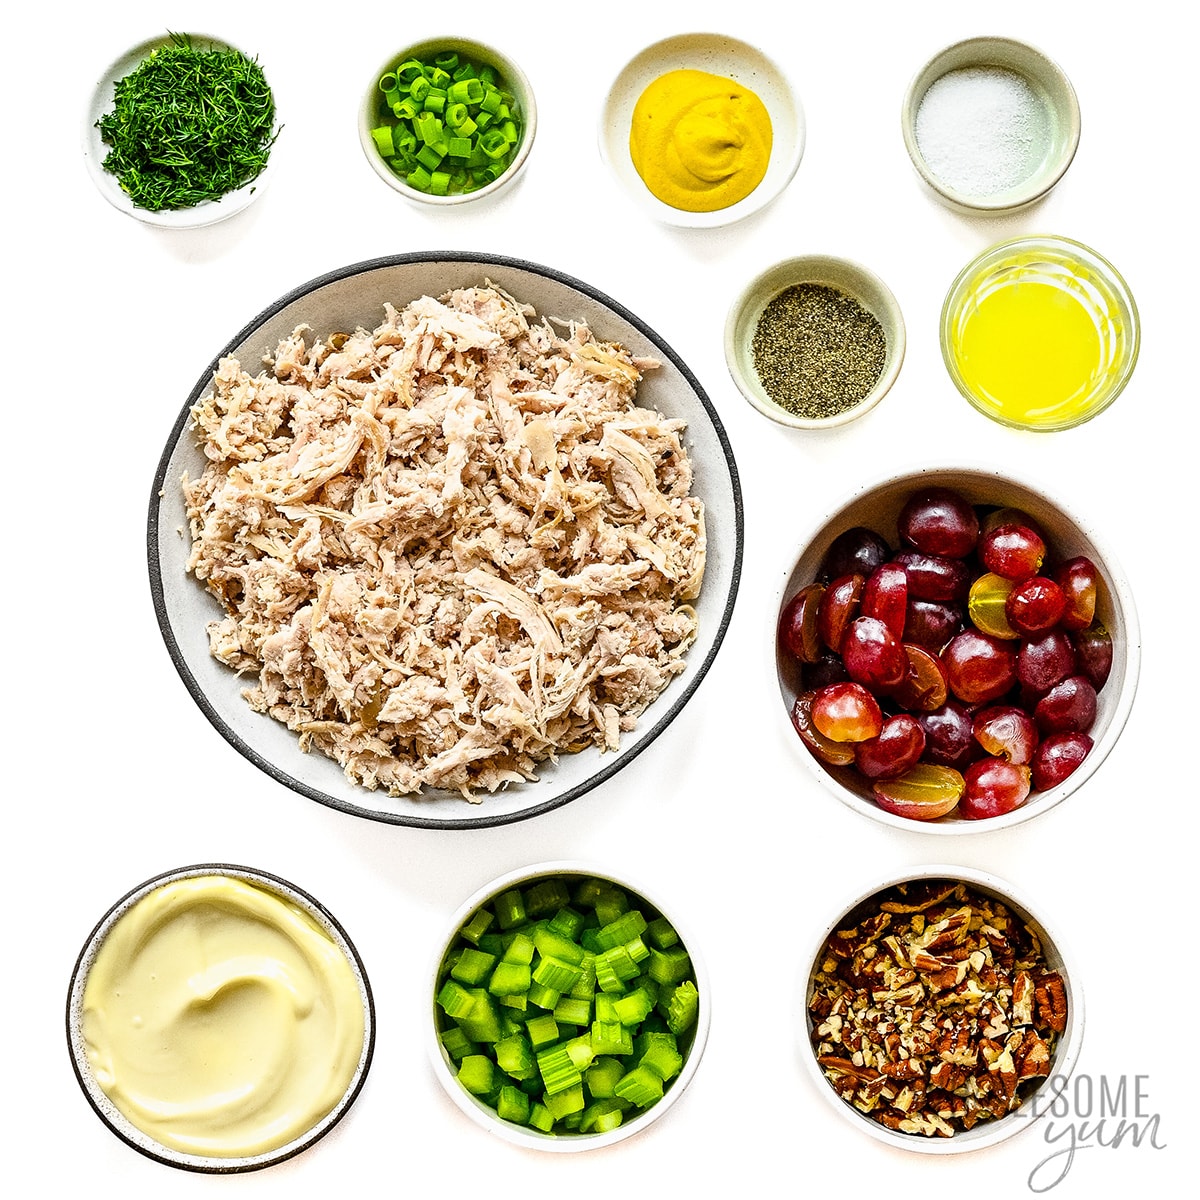 Chicken salad ingredients measured in bowls.